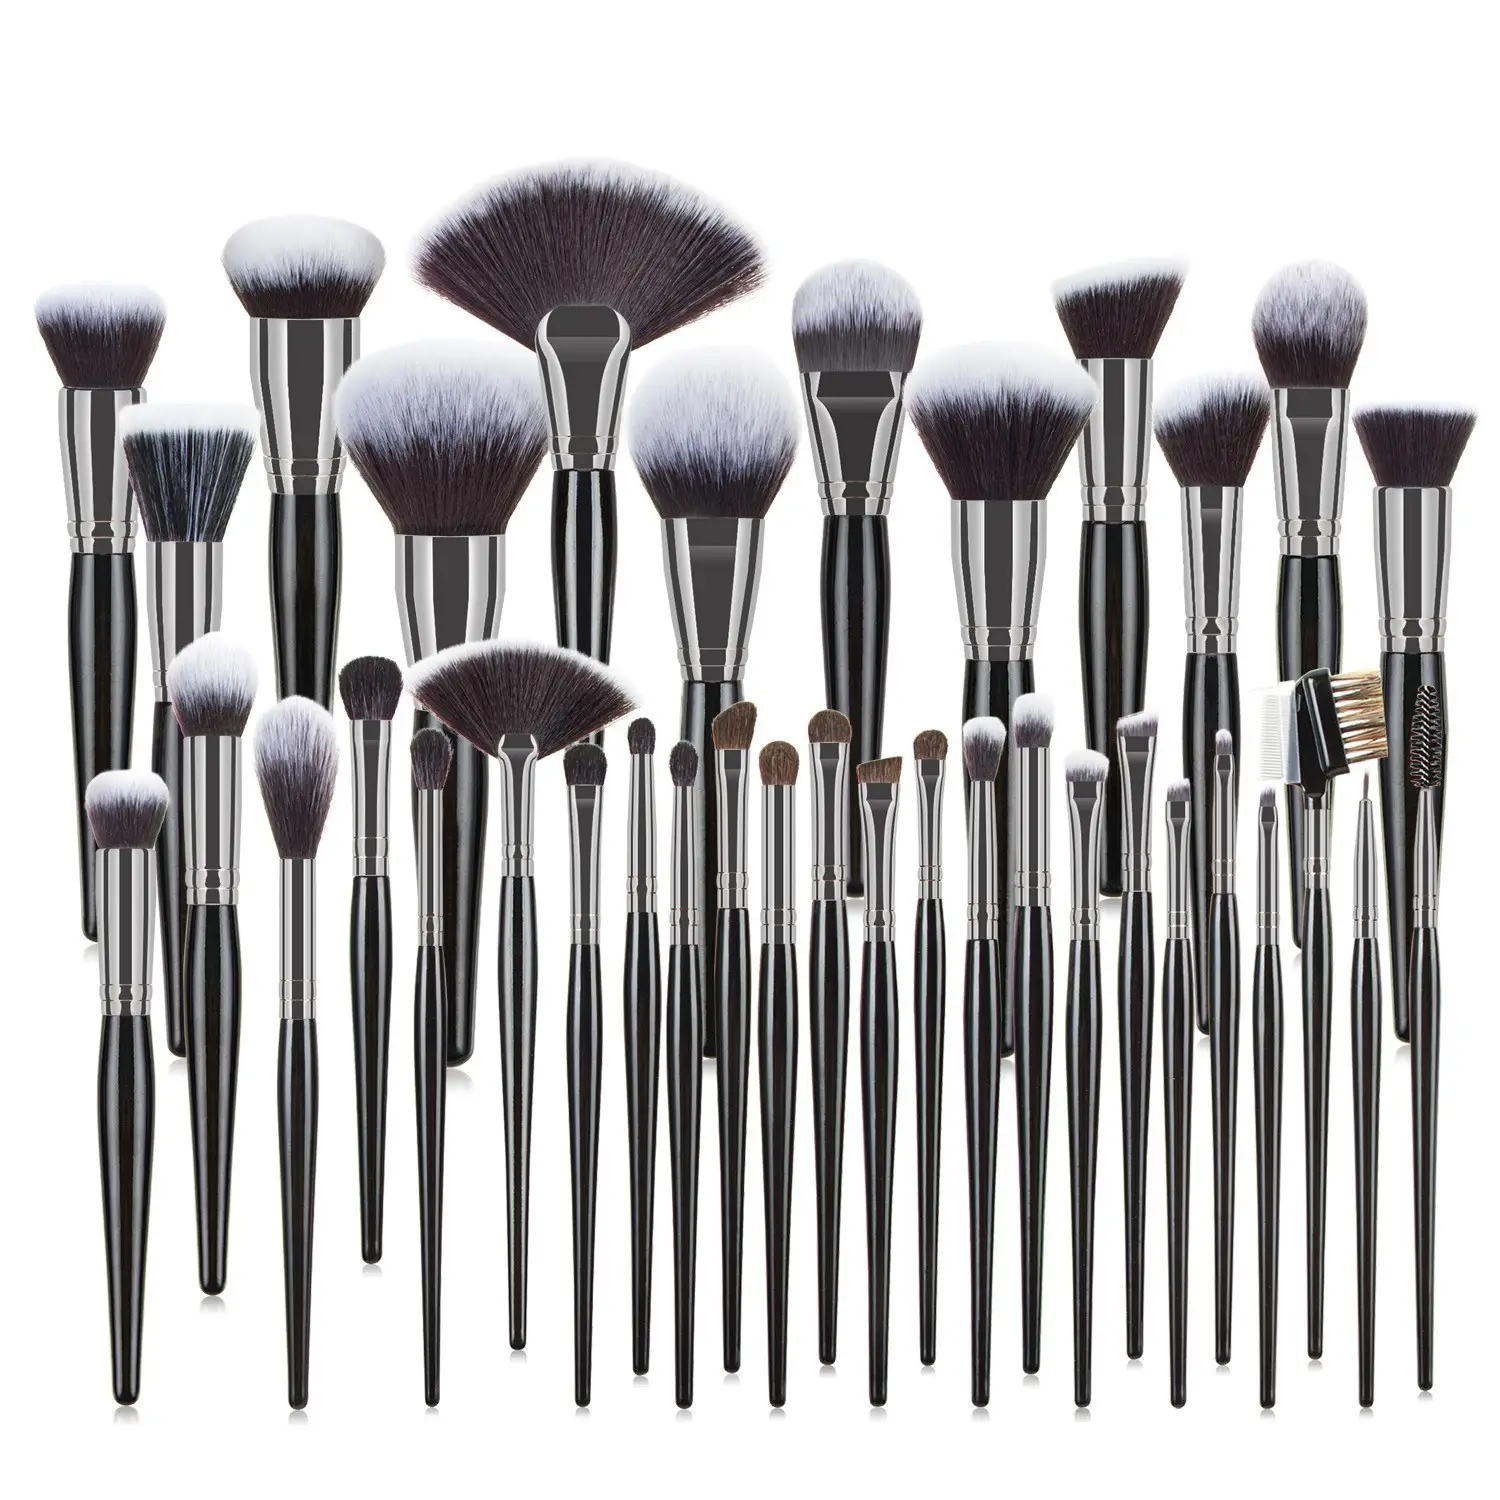 Personalized Brush Make Set Up Black Luxury Wooden Handle Make Up Private Label Brushes Cosmetic Makeup Brush Set